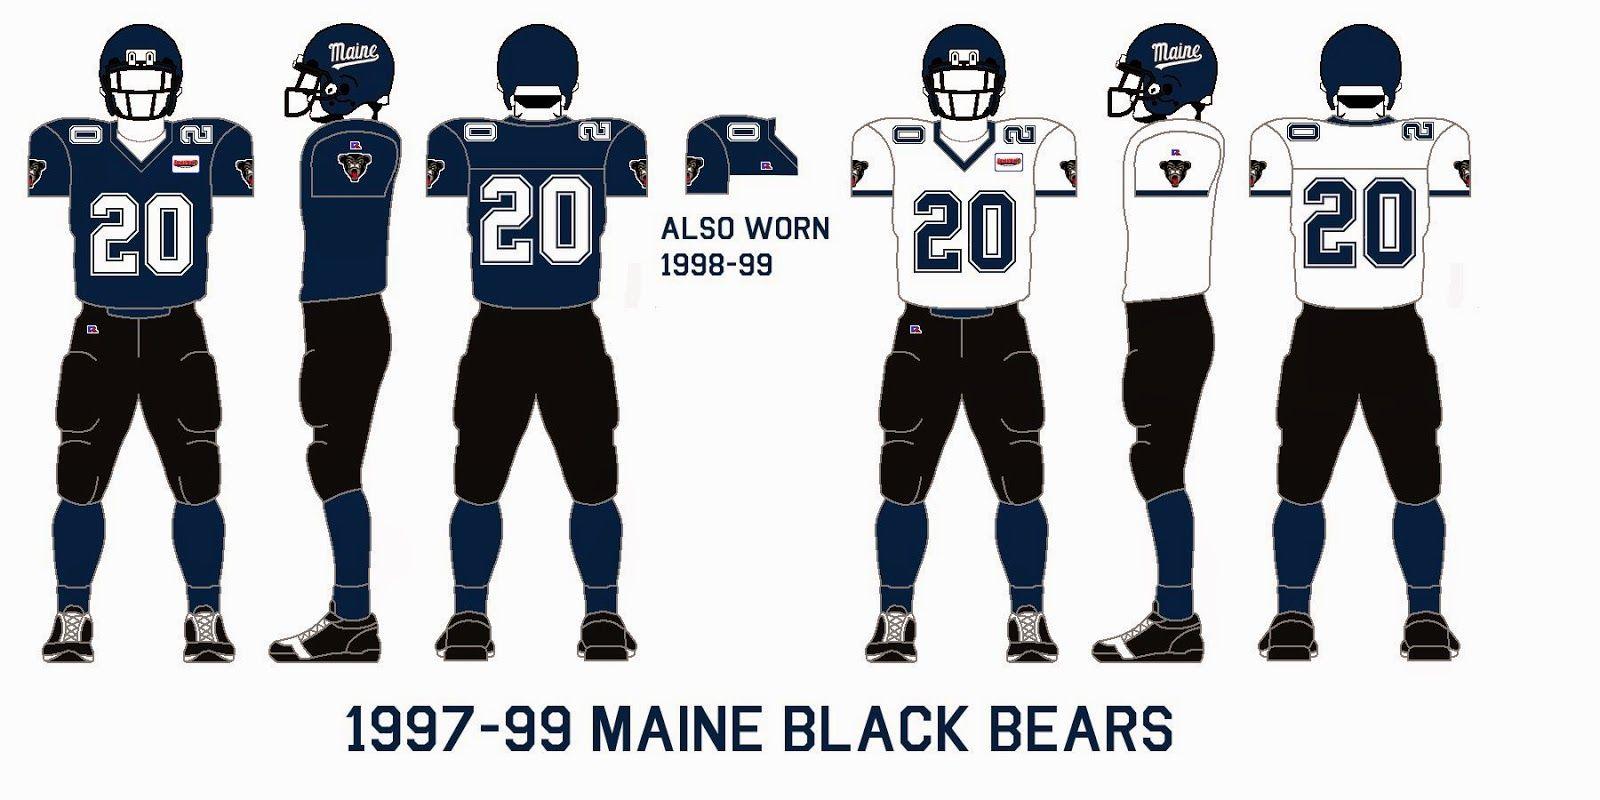 Black Bears Football Logo - Gridiron Garb: Maine Black Bears (1997-99)